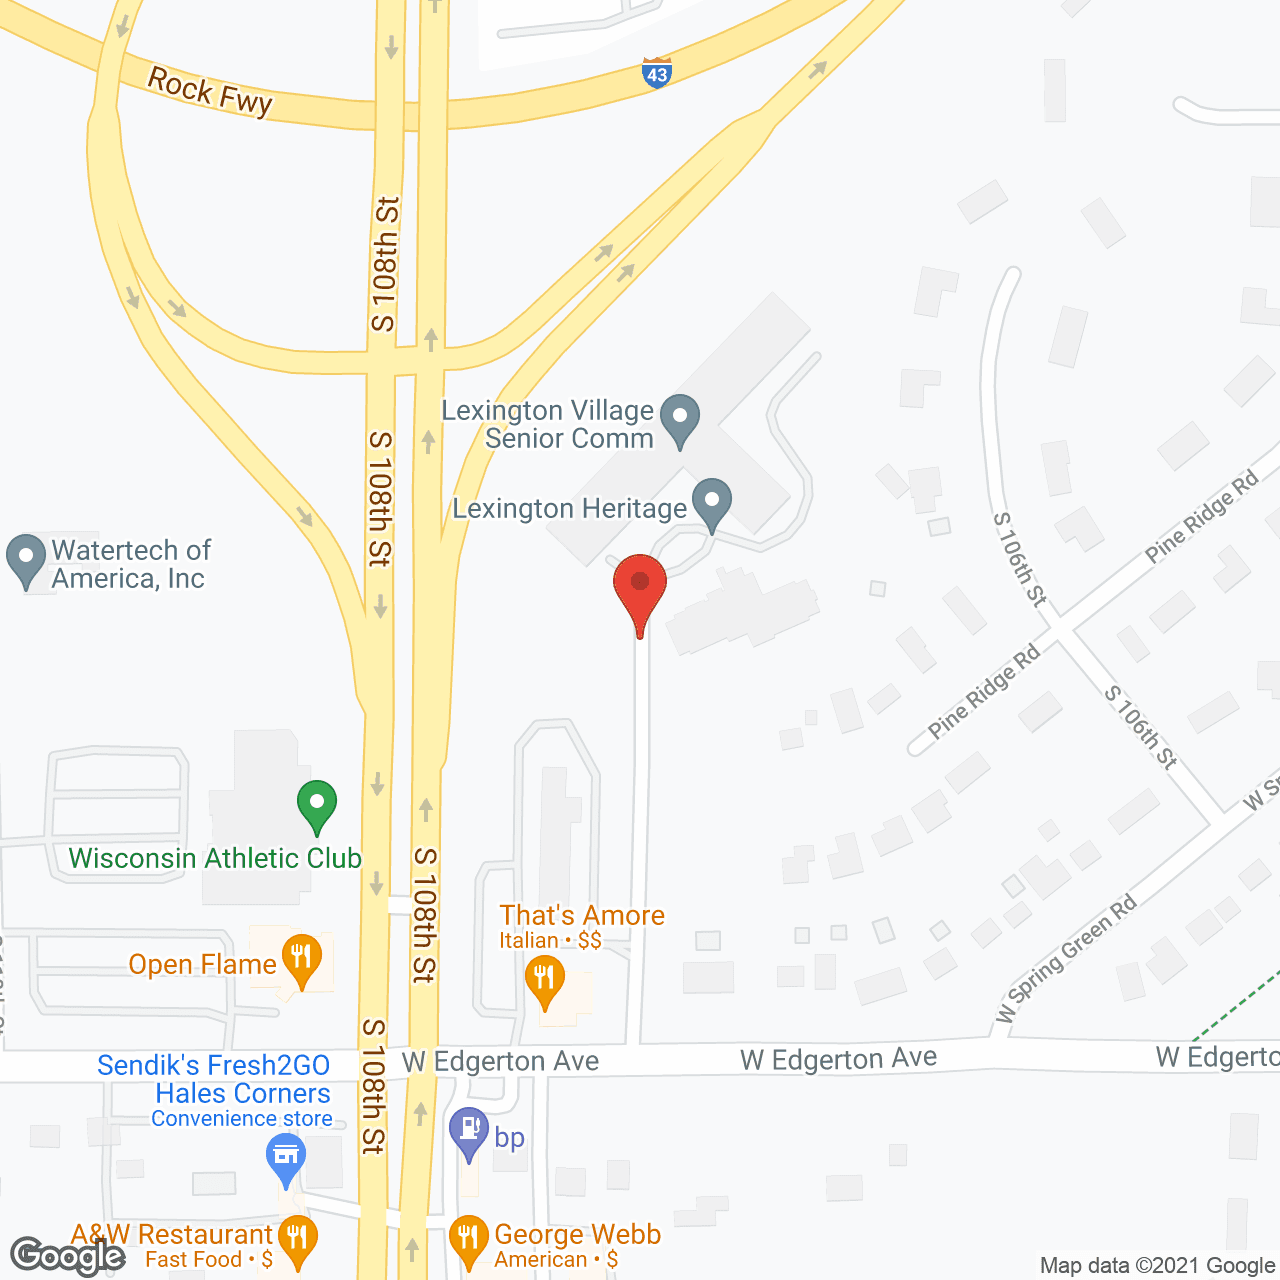 Lexington Heritage in google map